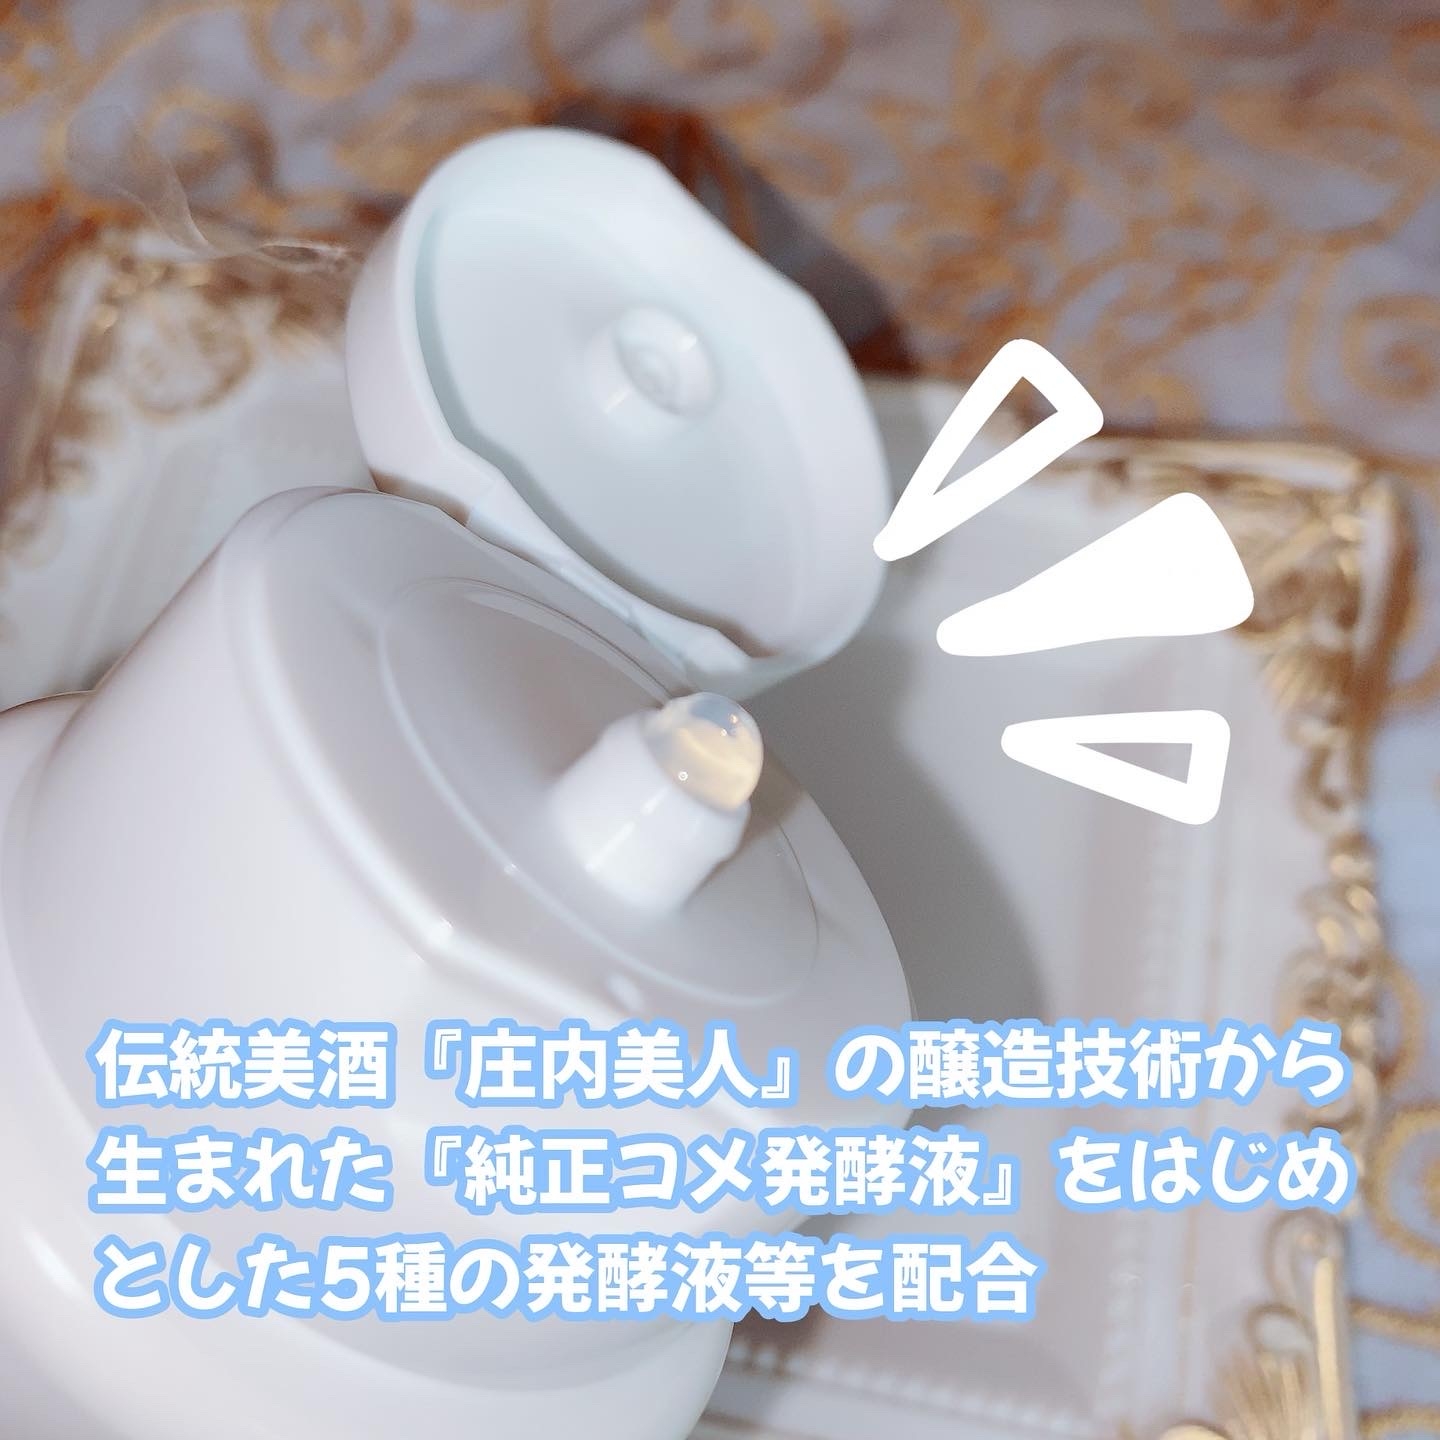 Salanaru(サラナル) ピュアクレンジングジェル ホワイトの良い点・メリットに関する珈琲豆♡さんの口コミ画像1